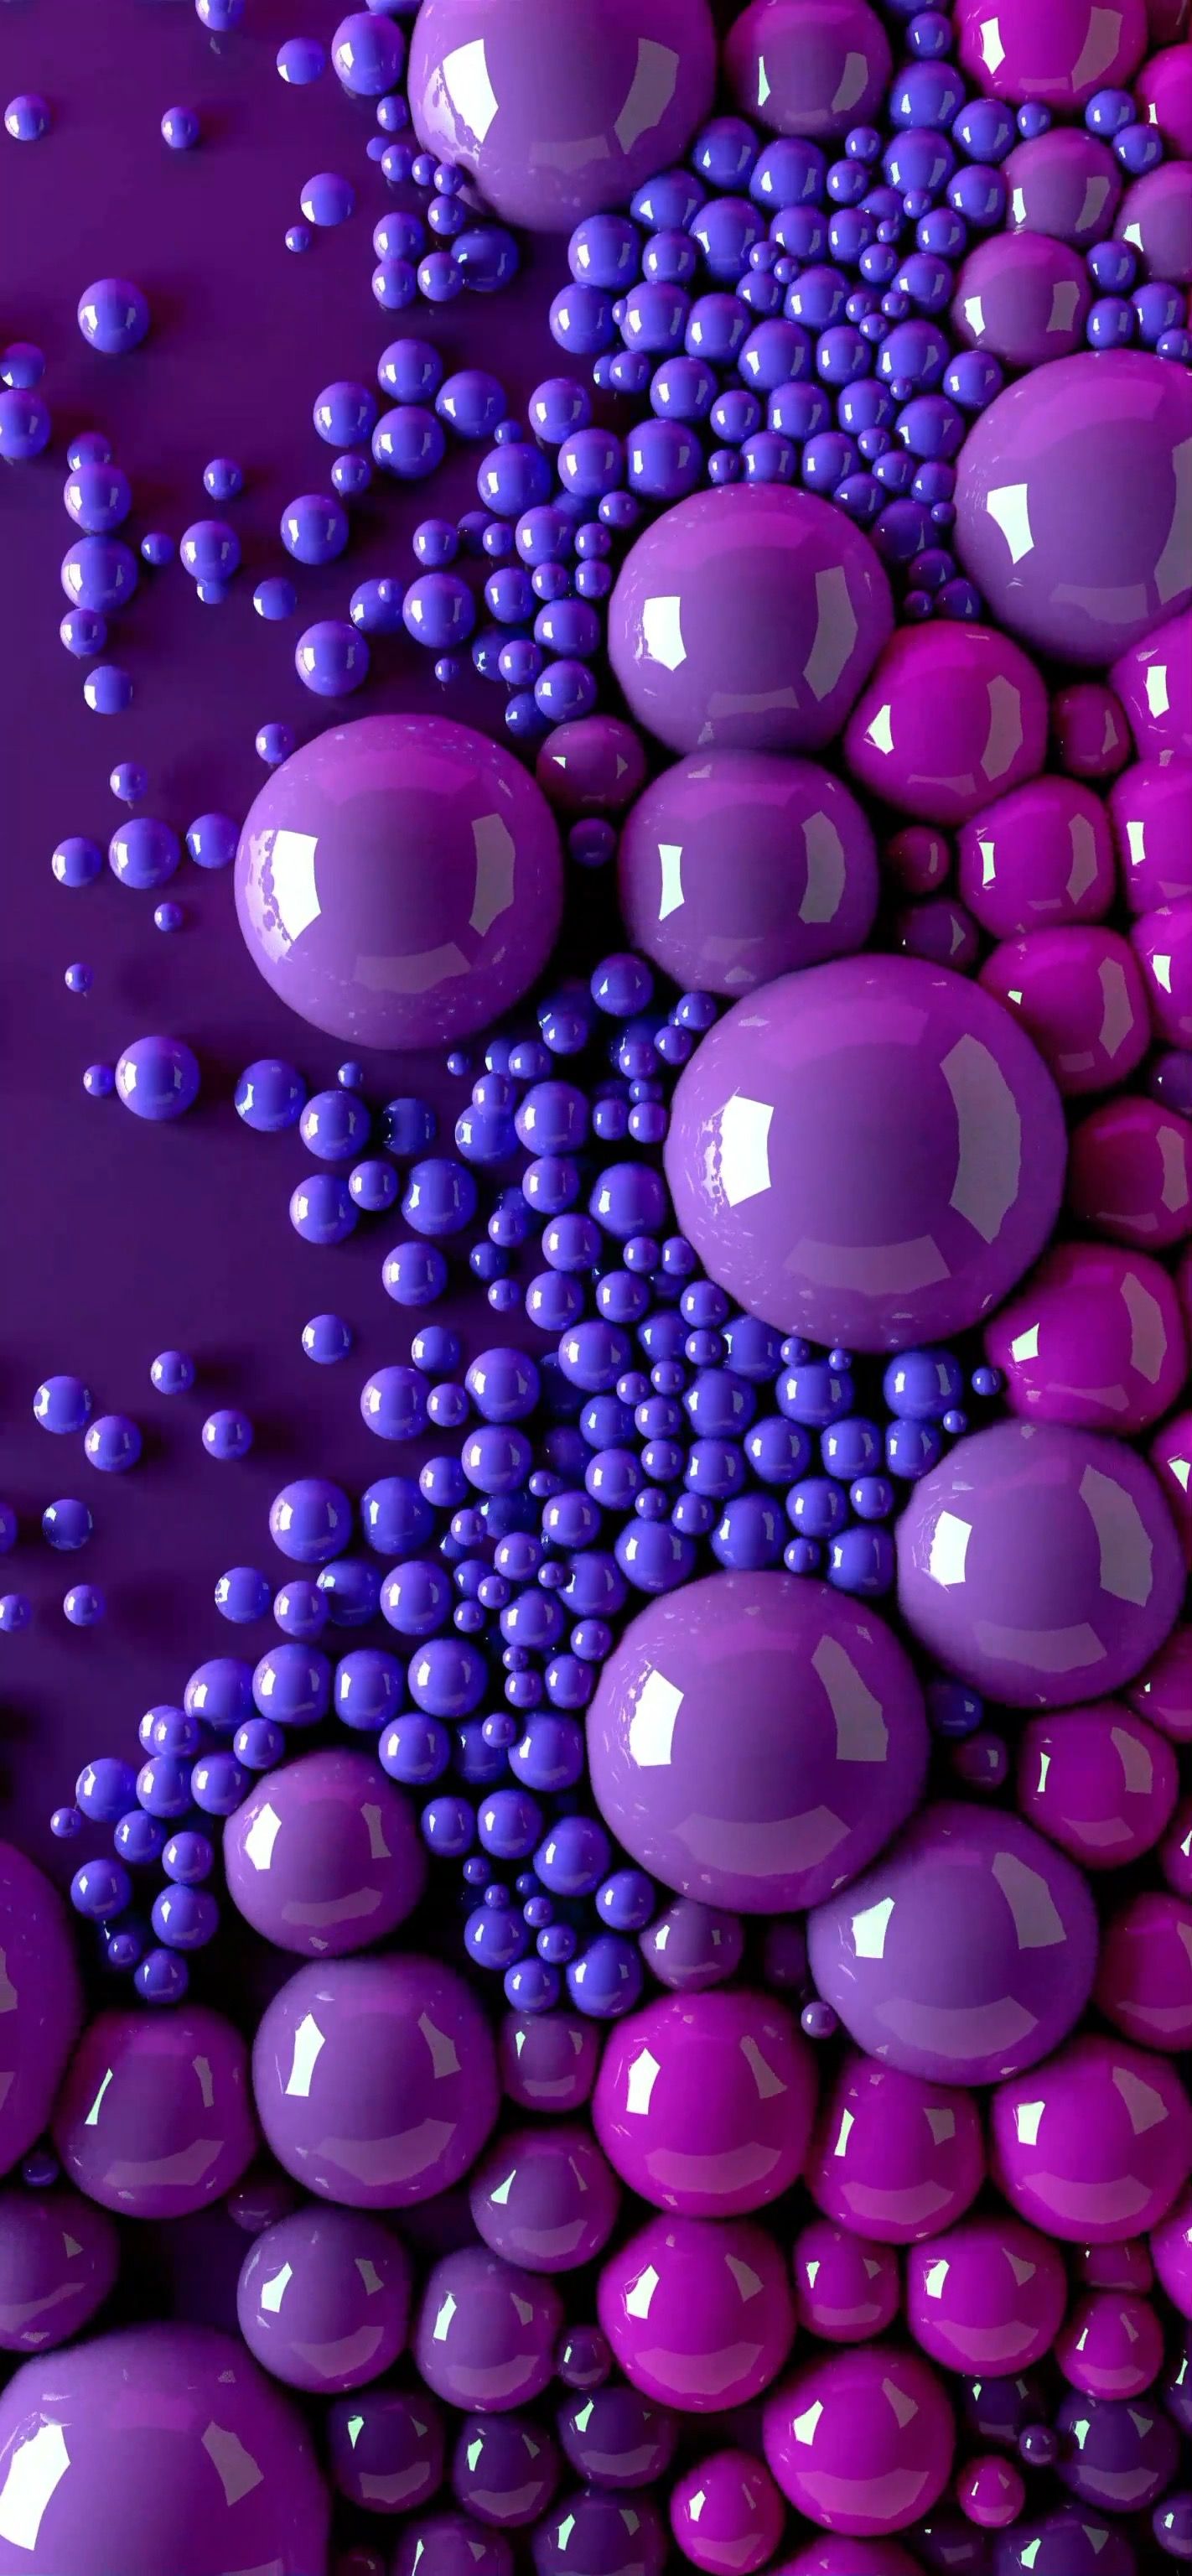 Moving Bubbles. LIVE Wallpaper Central. Bubbles wallpaper, Screen savers wallpaper, Cellphone wallpaper background